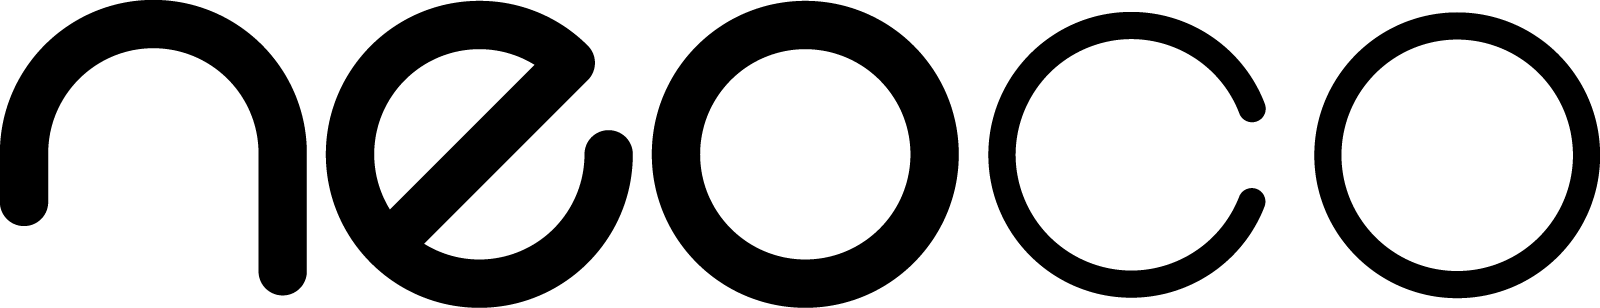 Neoco Logo